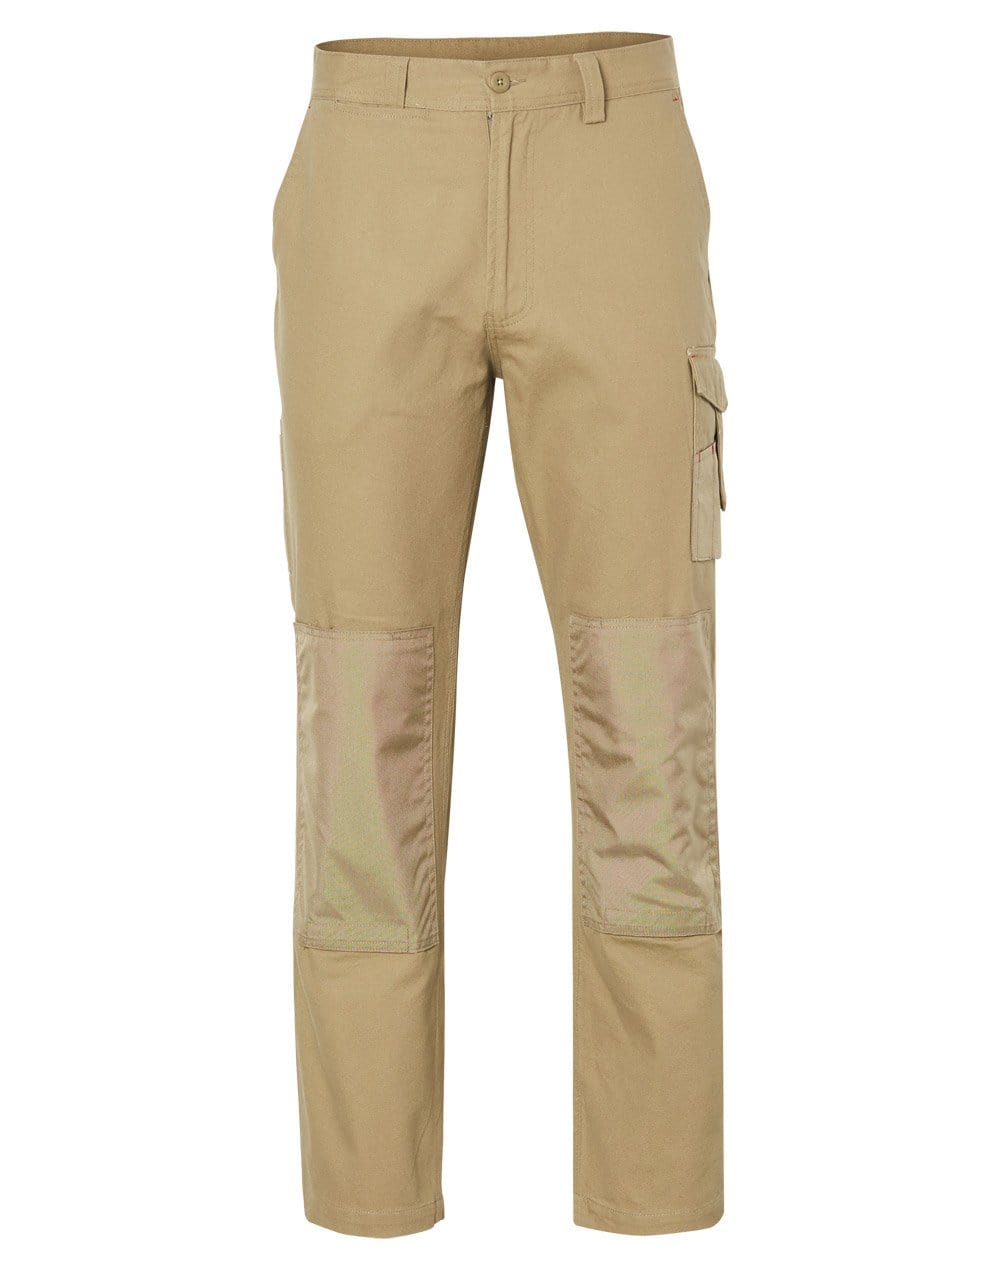 Australian Industrial Wear Work Wear Khaki / 87S CORDURA DURABLE WORK PANTS Stout Size WP17